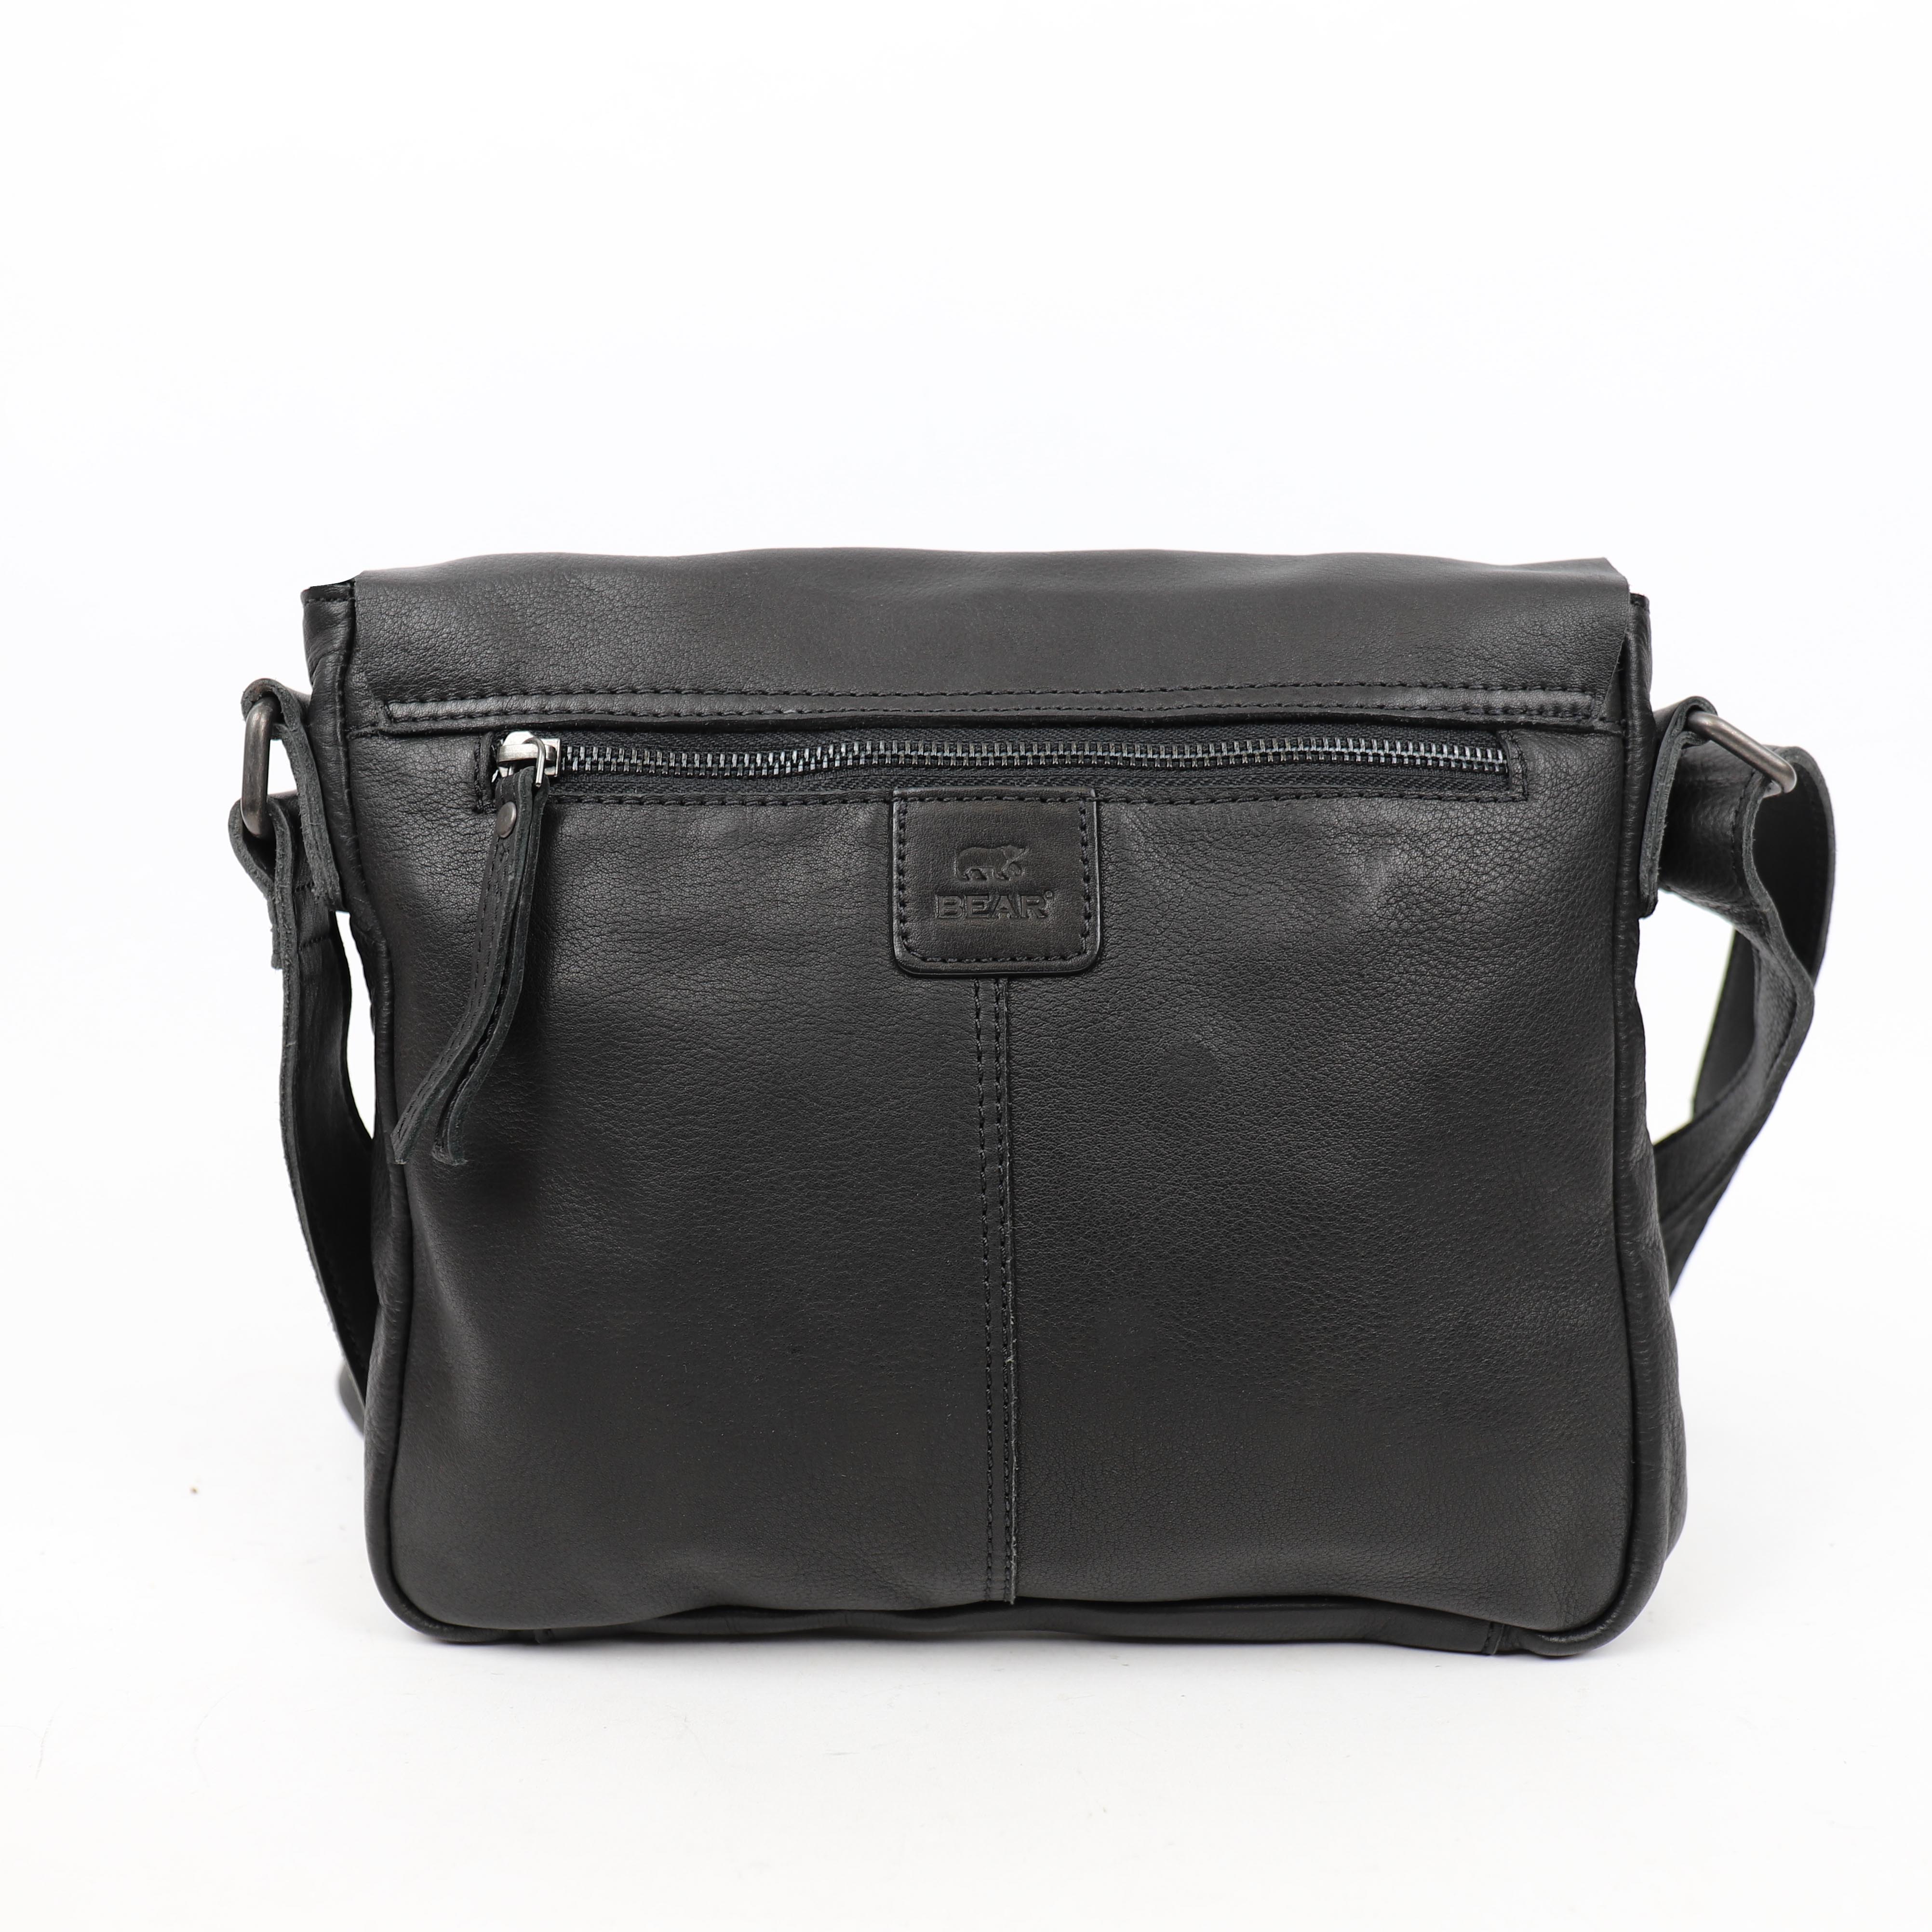 Shoulder bag 'Lauro' black - CP 0771